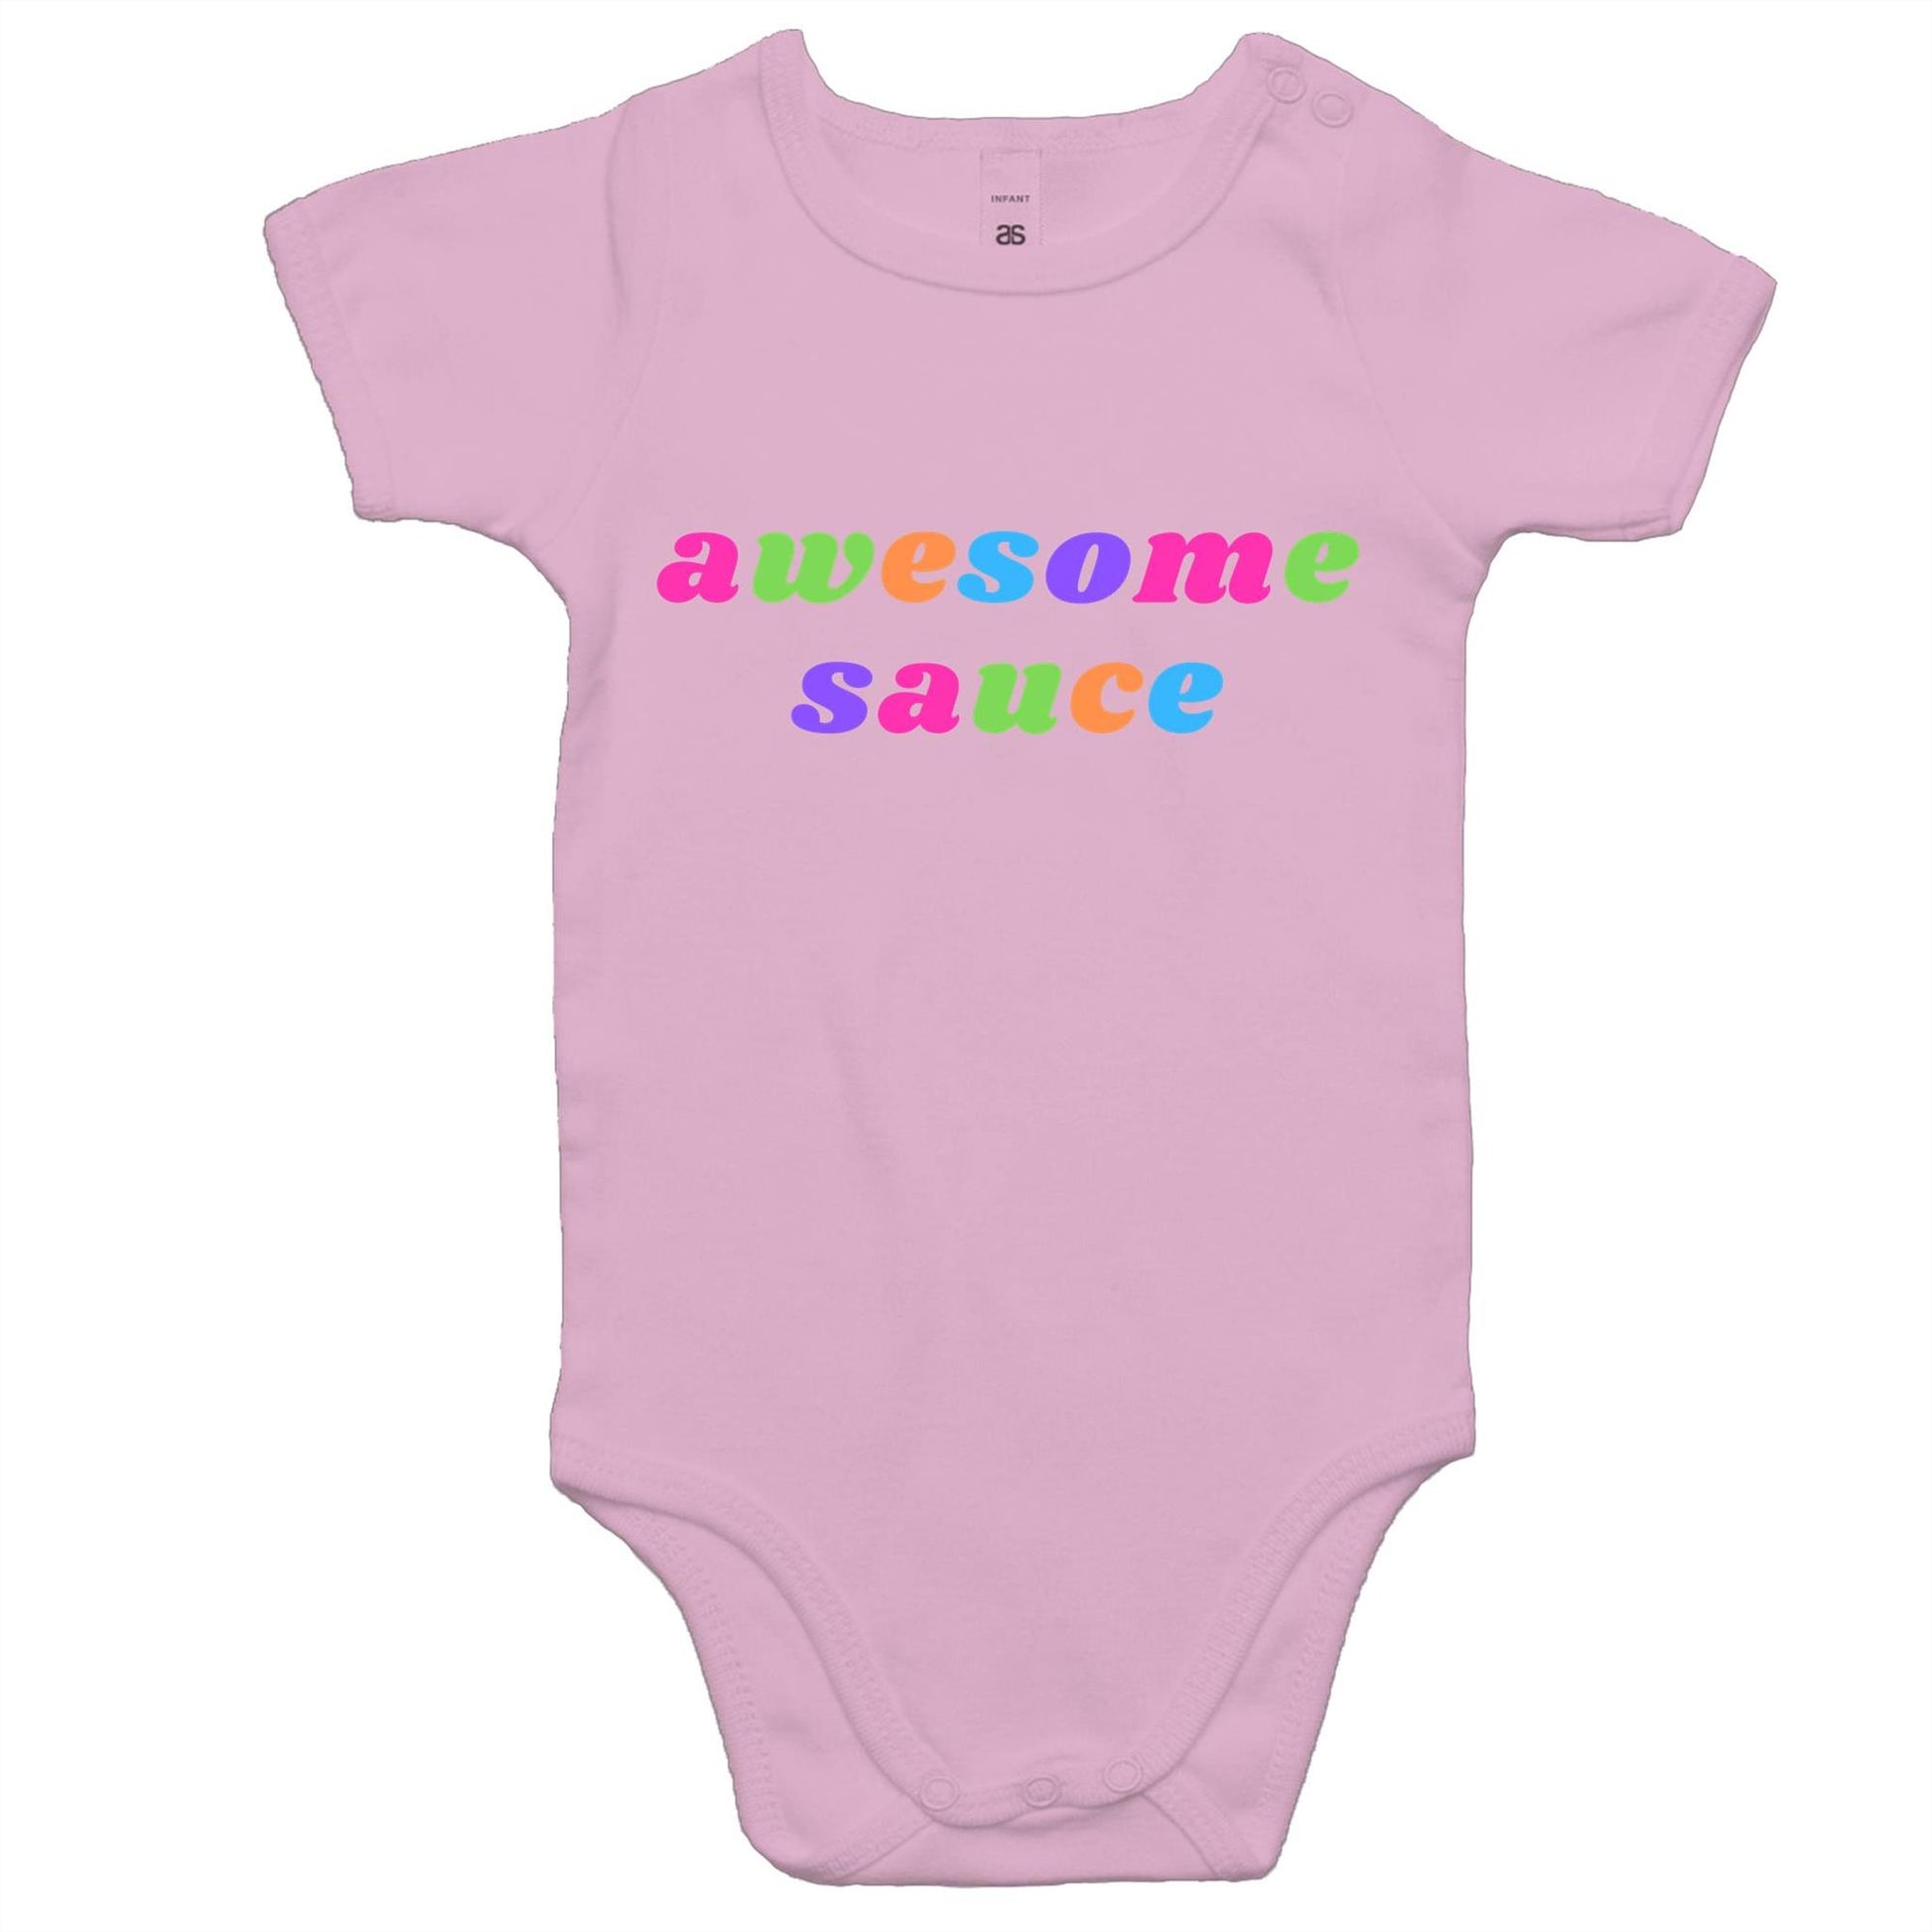 Awesome Sauce - Baby Bodysuit Pink Baby Bodysuit kids